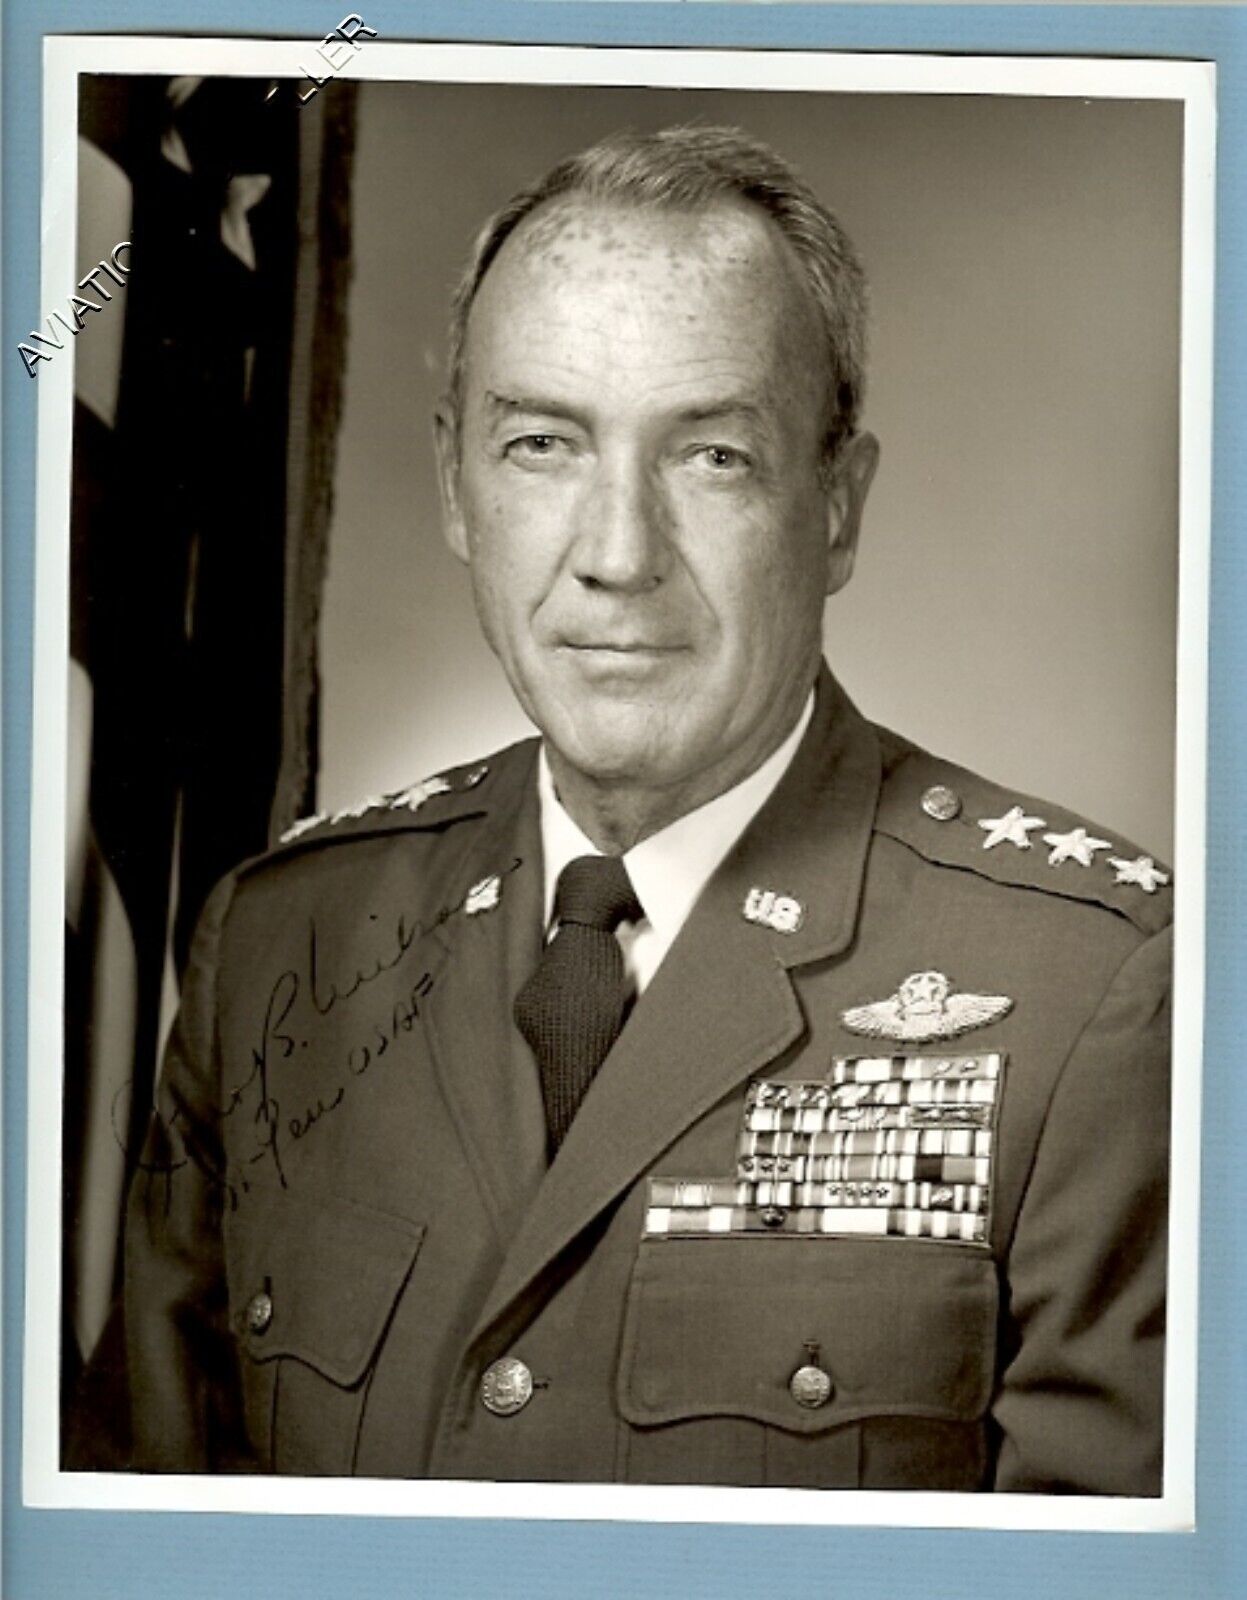 LT GEN Joseph G. Wilson: XP-80 PROJECT OFFICER & VIETNAM F-4C WING CG SIGNED